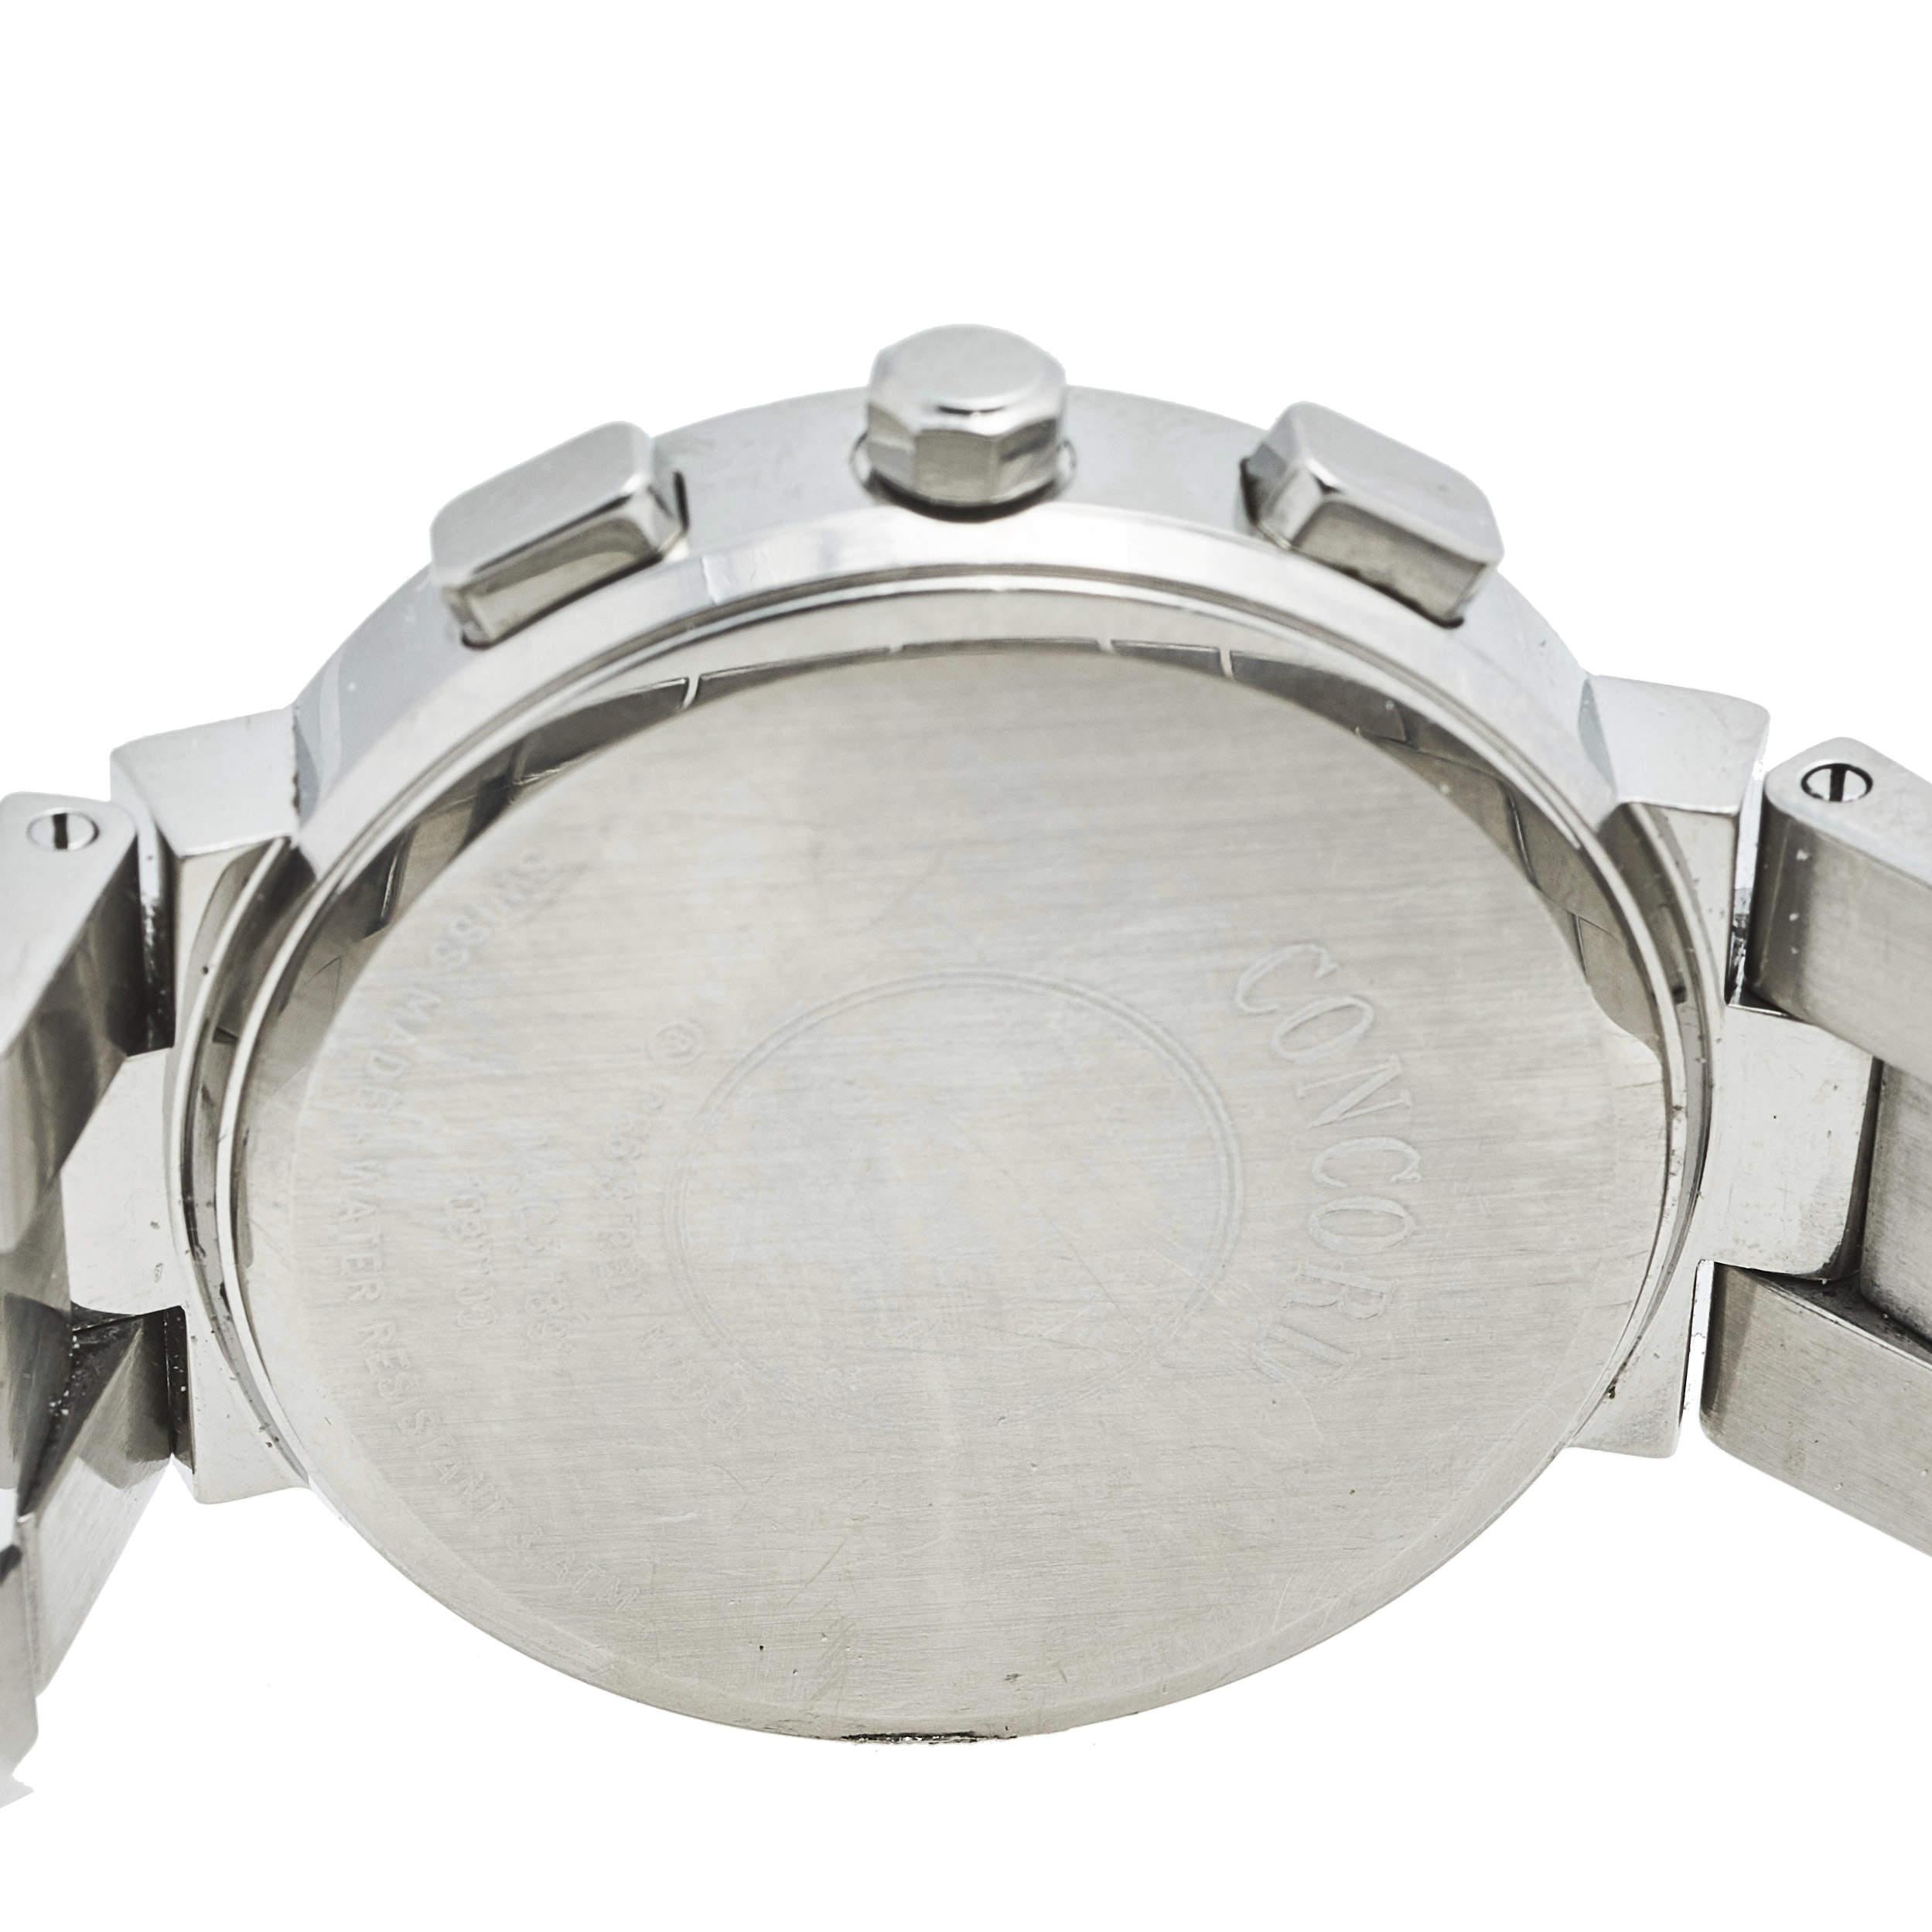 Concord Silver Stainless Steel La Scala 14.C5.1891 Men's Wristwatch 38 mm 1